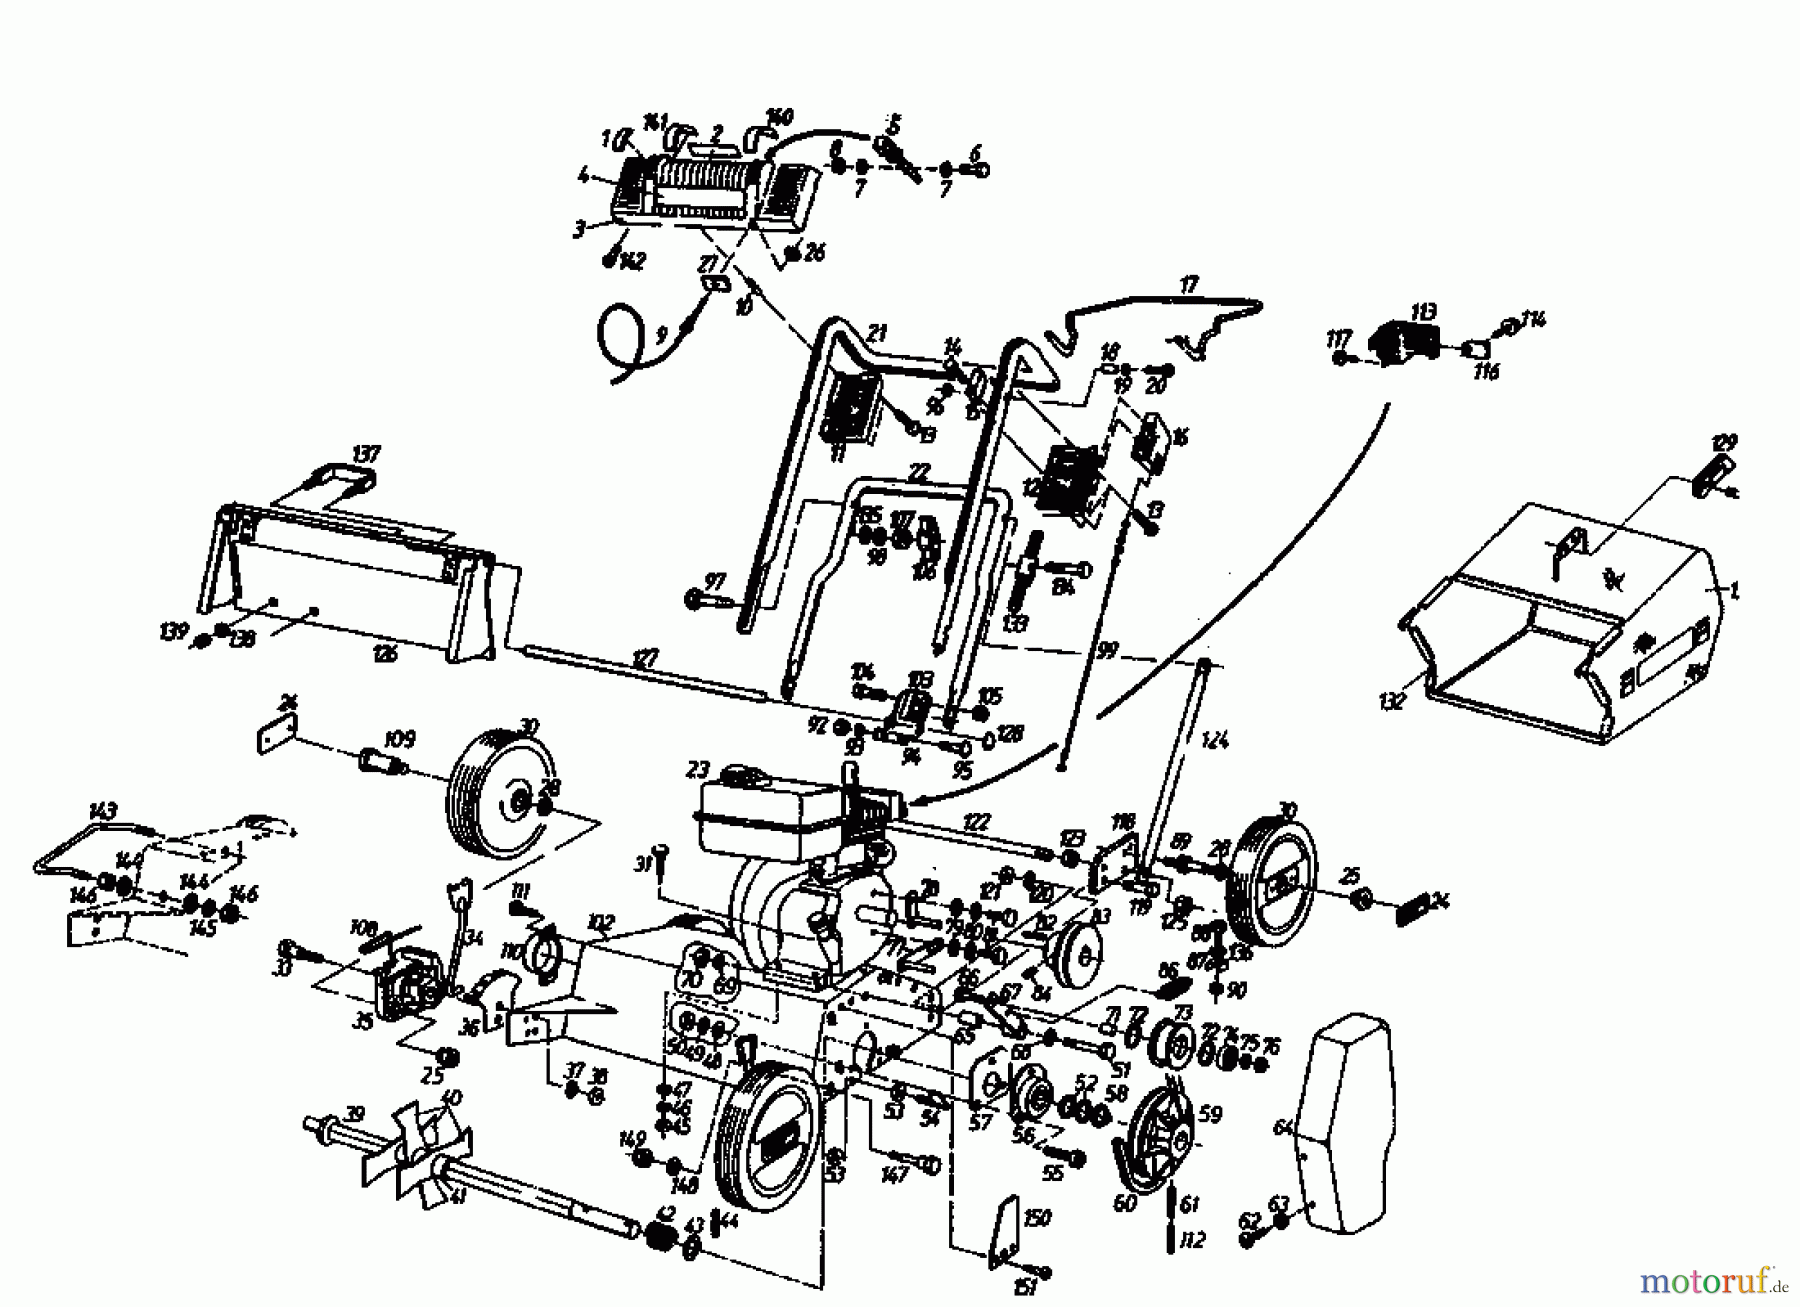  Gutbrod Petrol verticutter MV 404 04010.01  (1994) Basic machine